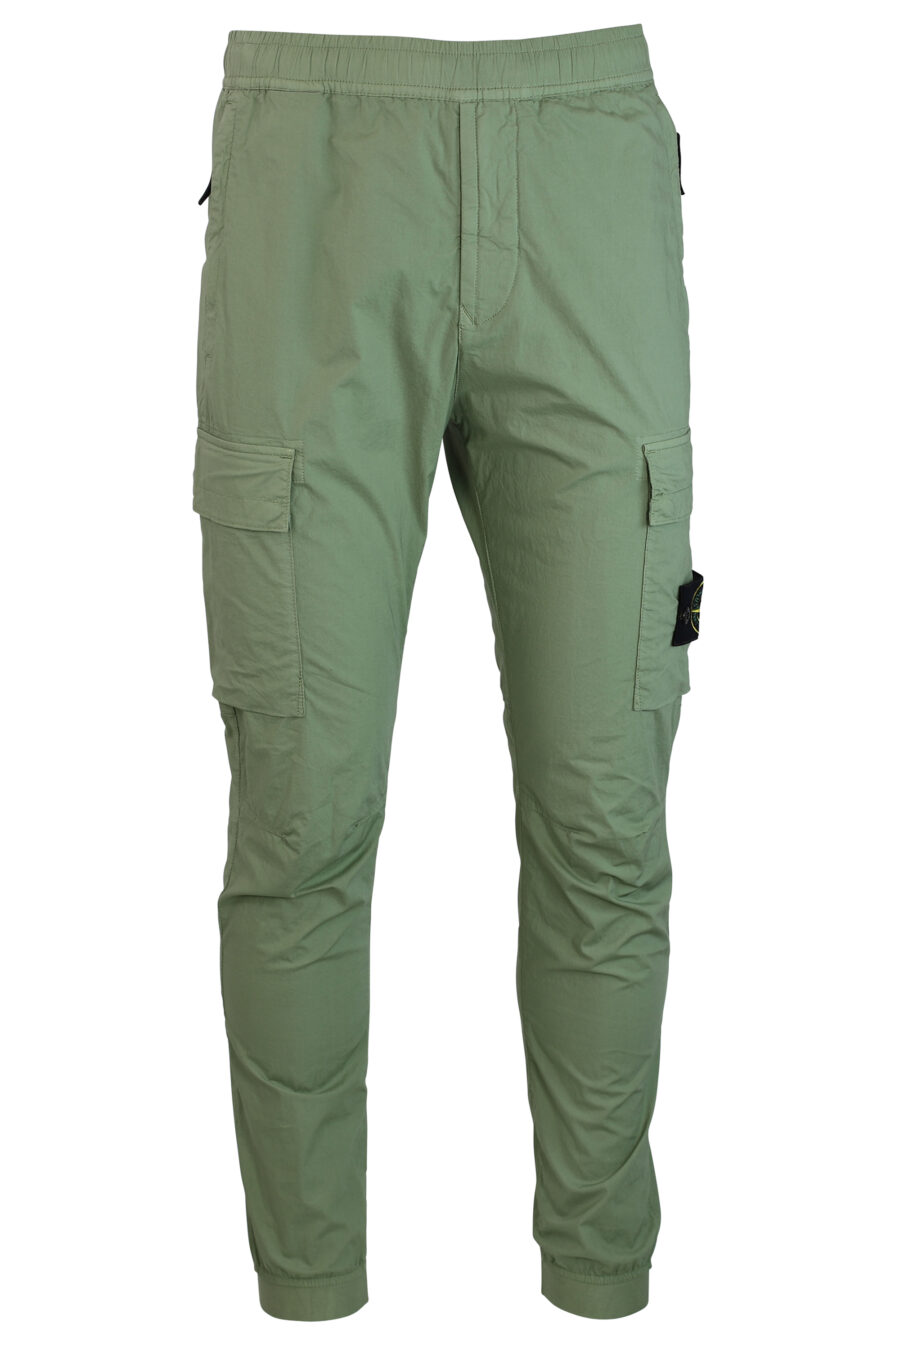 Pantalon cargo vert avec écusson - IMG 0283